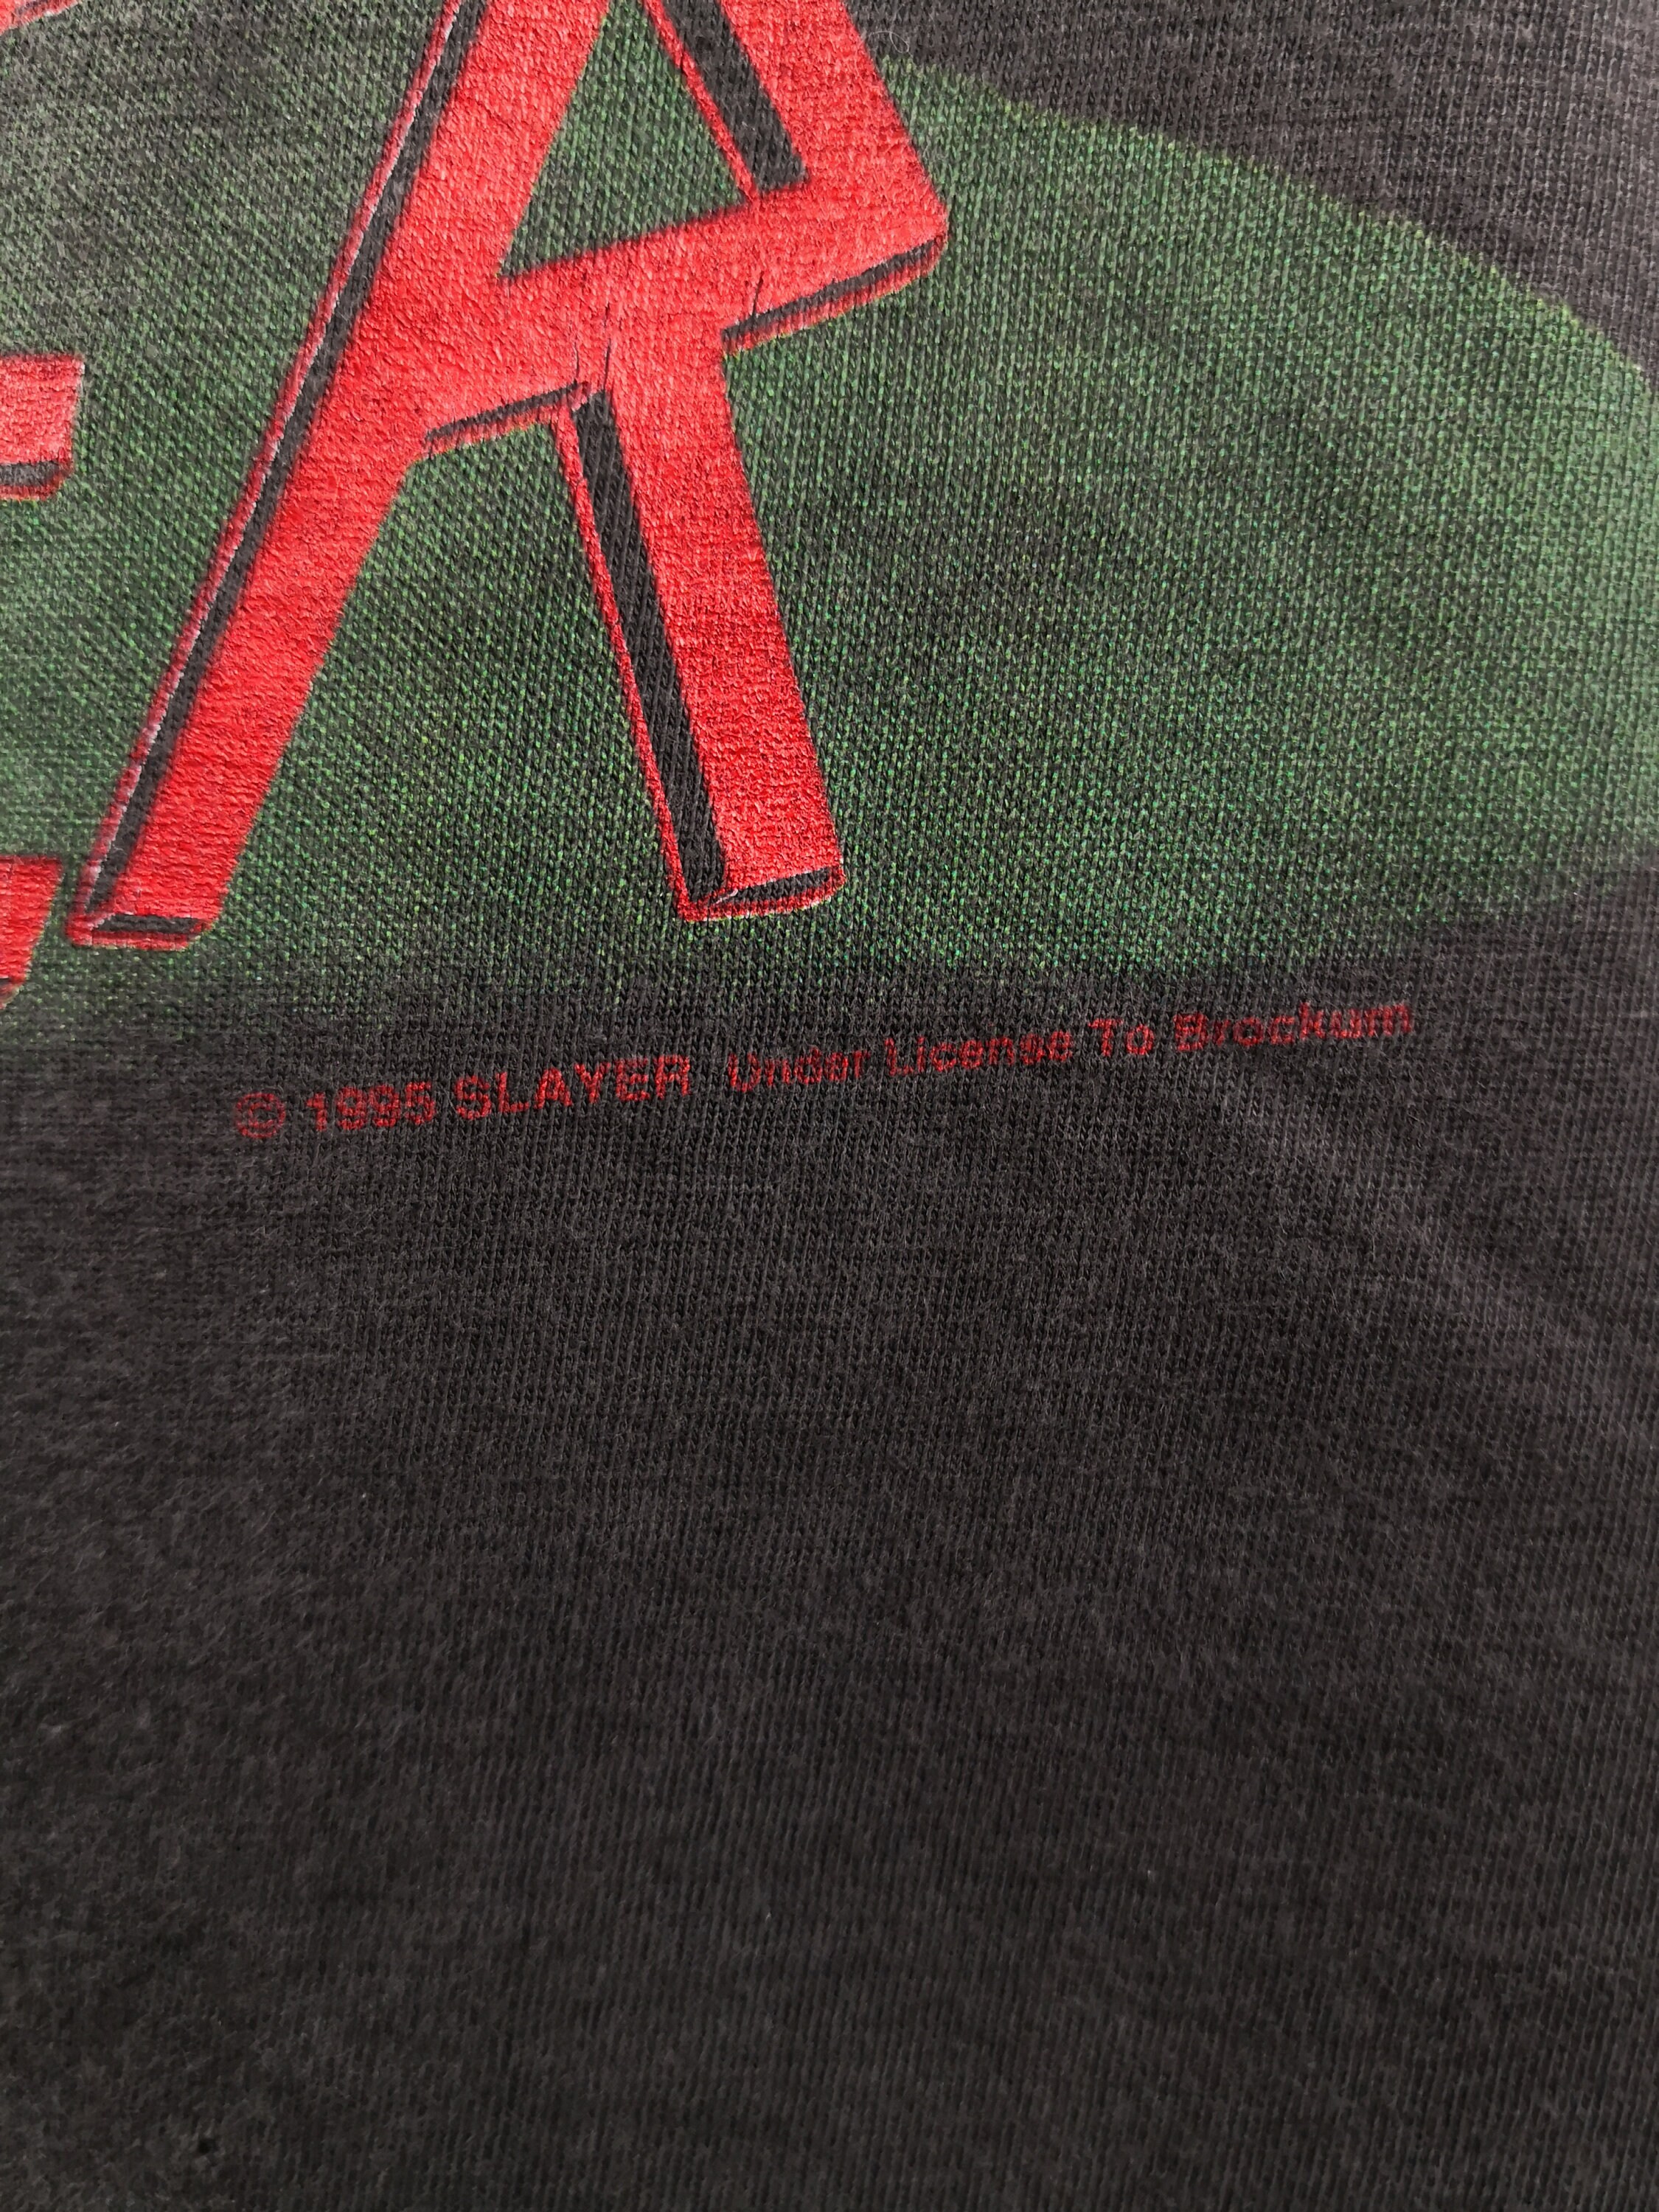 SLAYER 1995 Vintage T-shirt Root of All Evil / Mandatory | Etsy